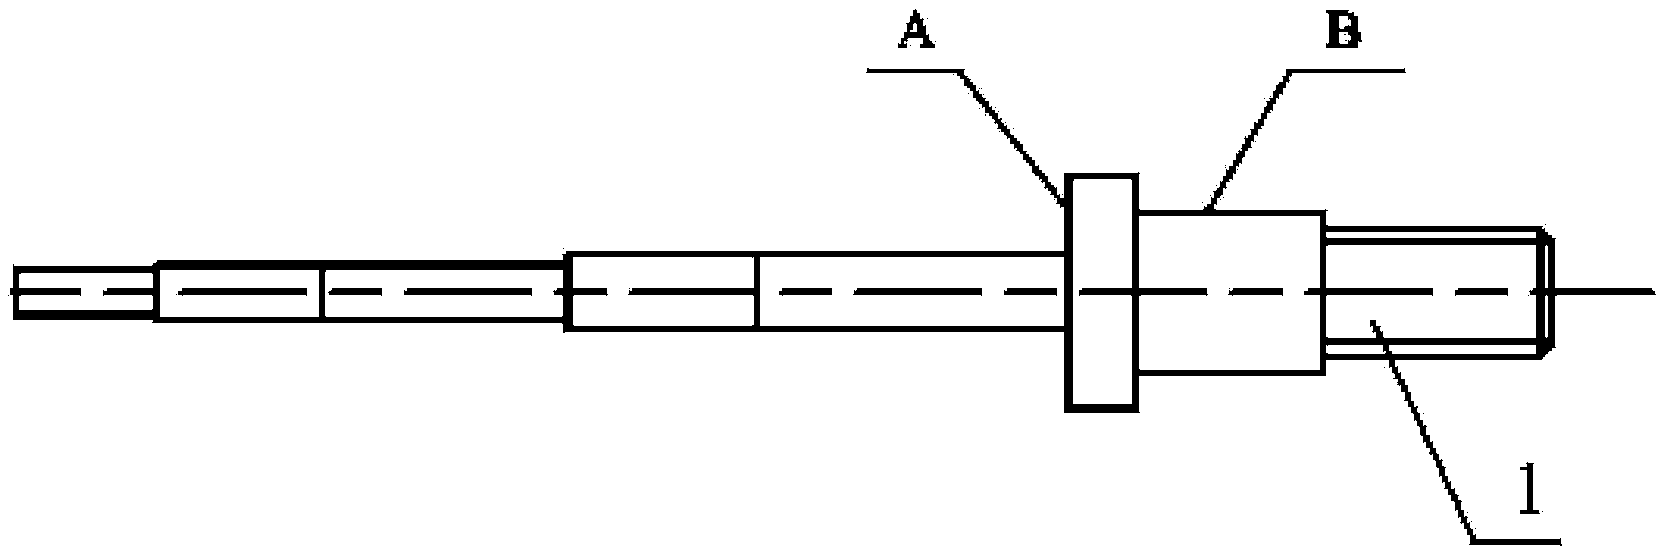 Conductive slip ring assembly assembling method